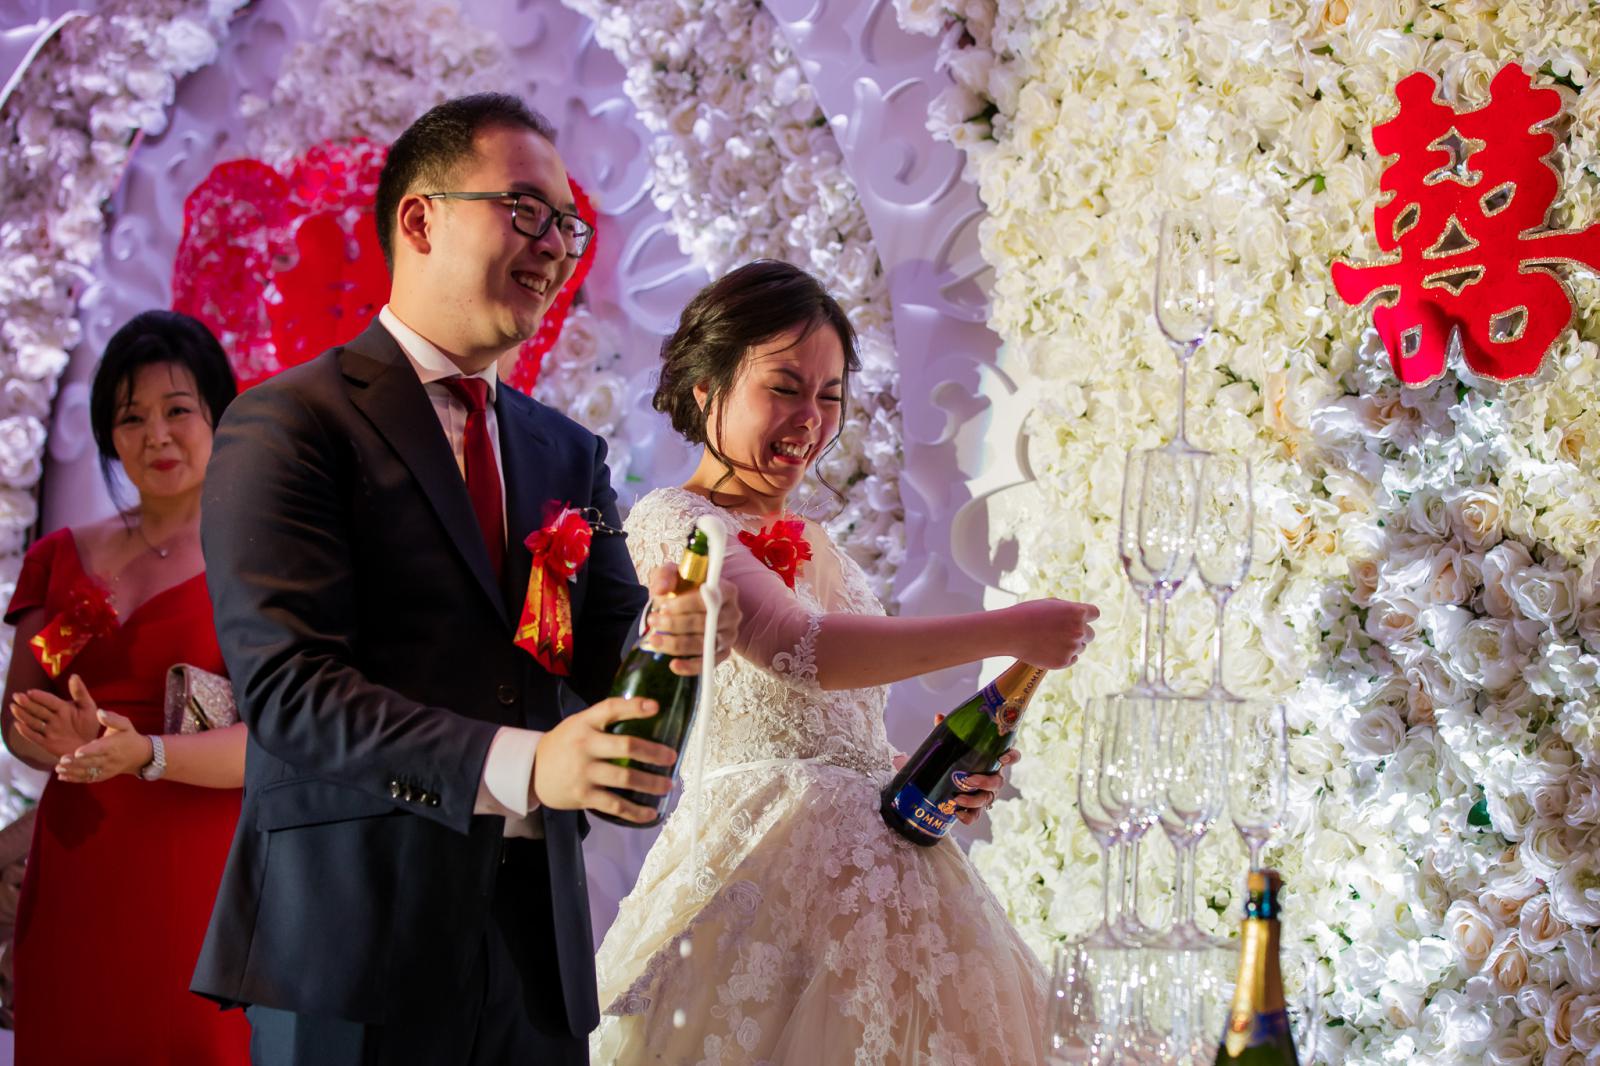 Chinese bruiloft champagne moment